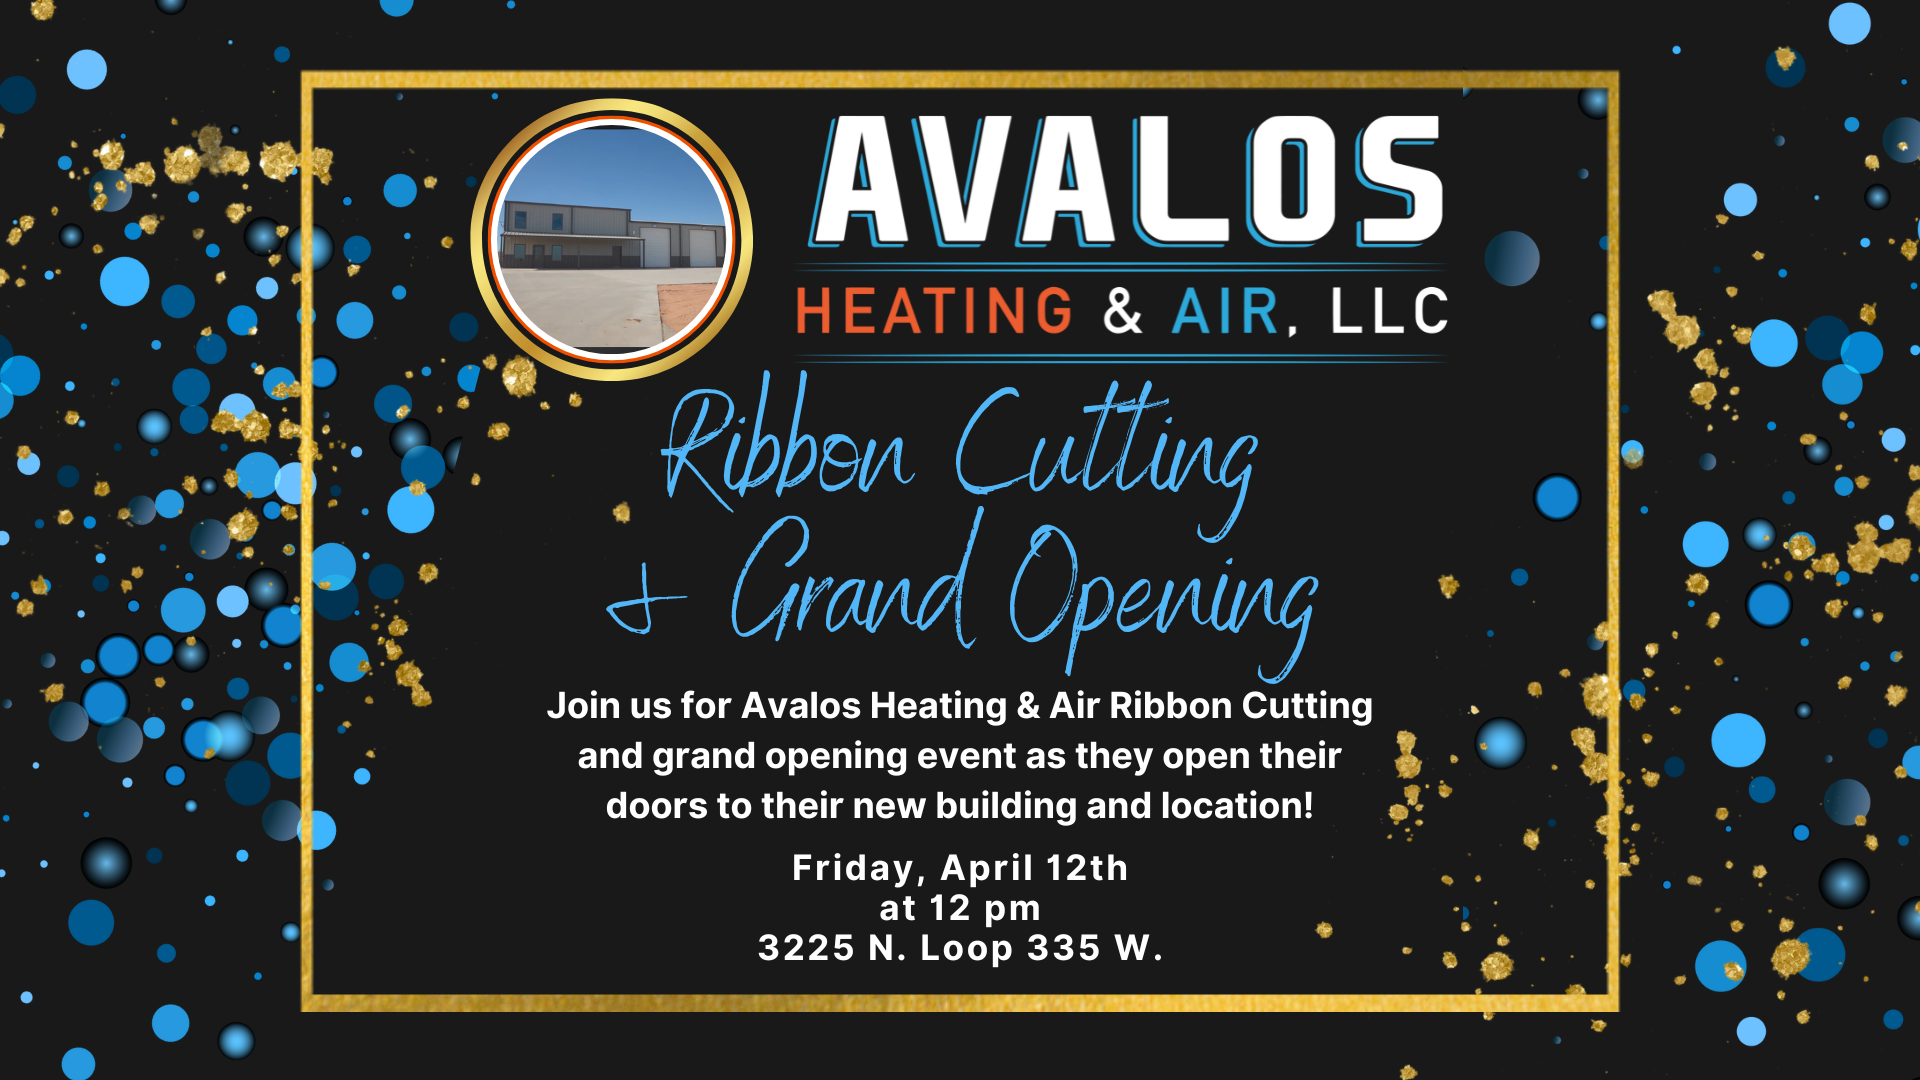 Avalos Heating & Air Ribbon Cutting @ Avalos Heating & Air Ribbon Cutting | Amarillo | Texas | United States